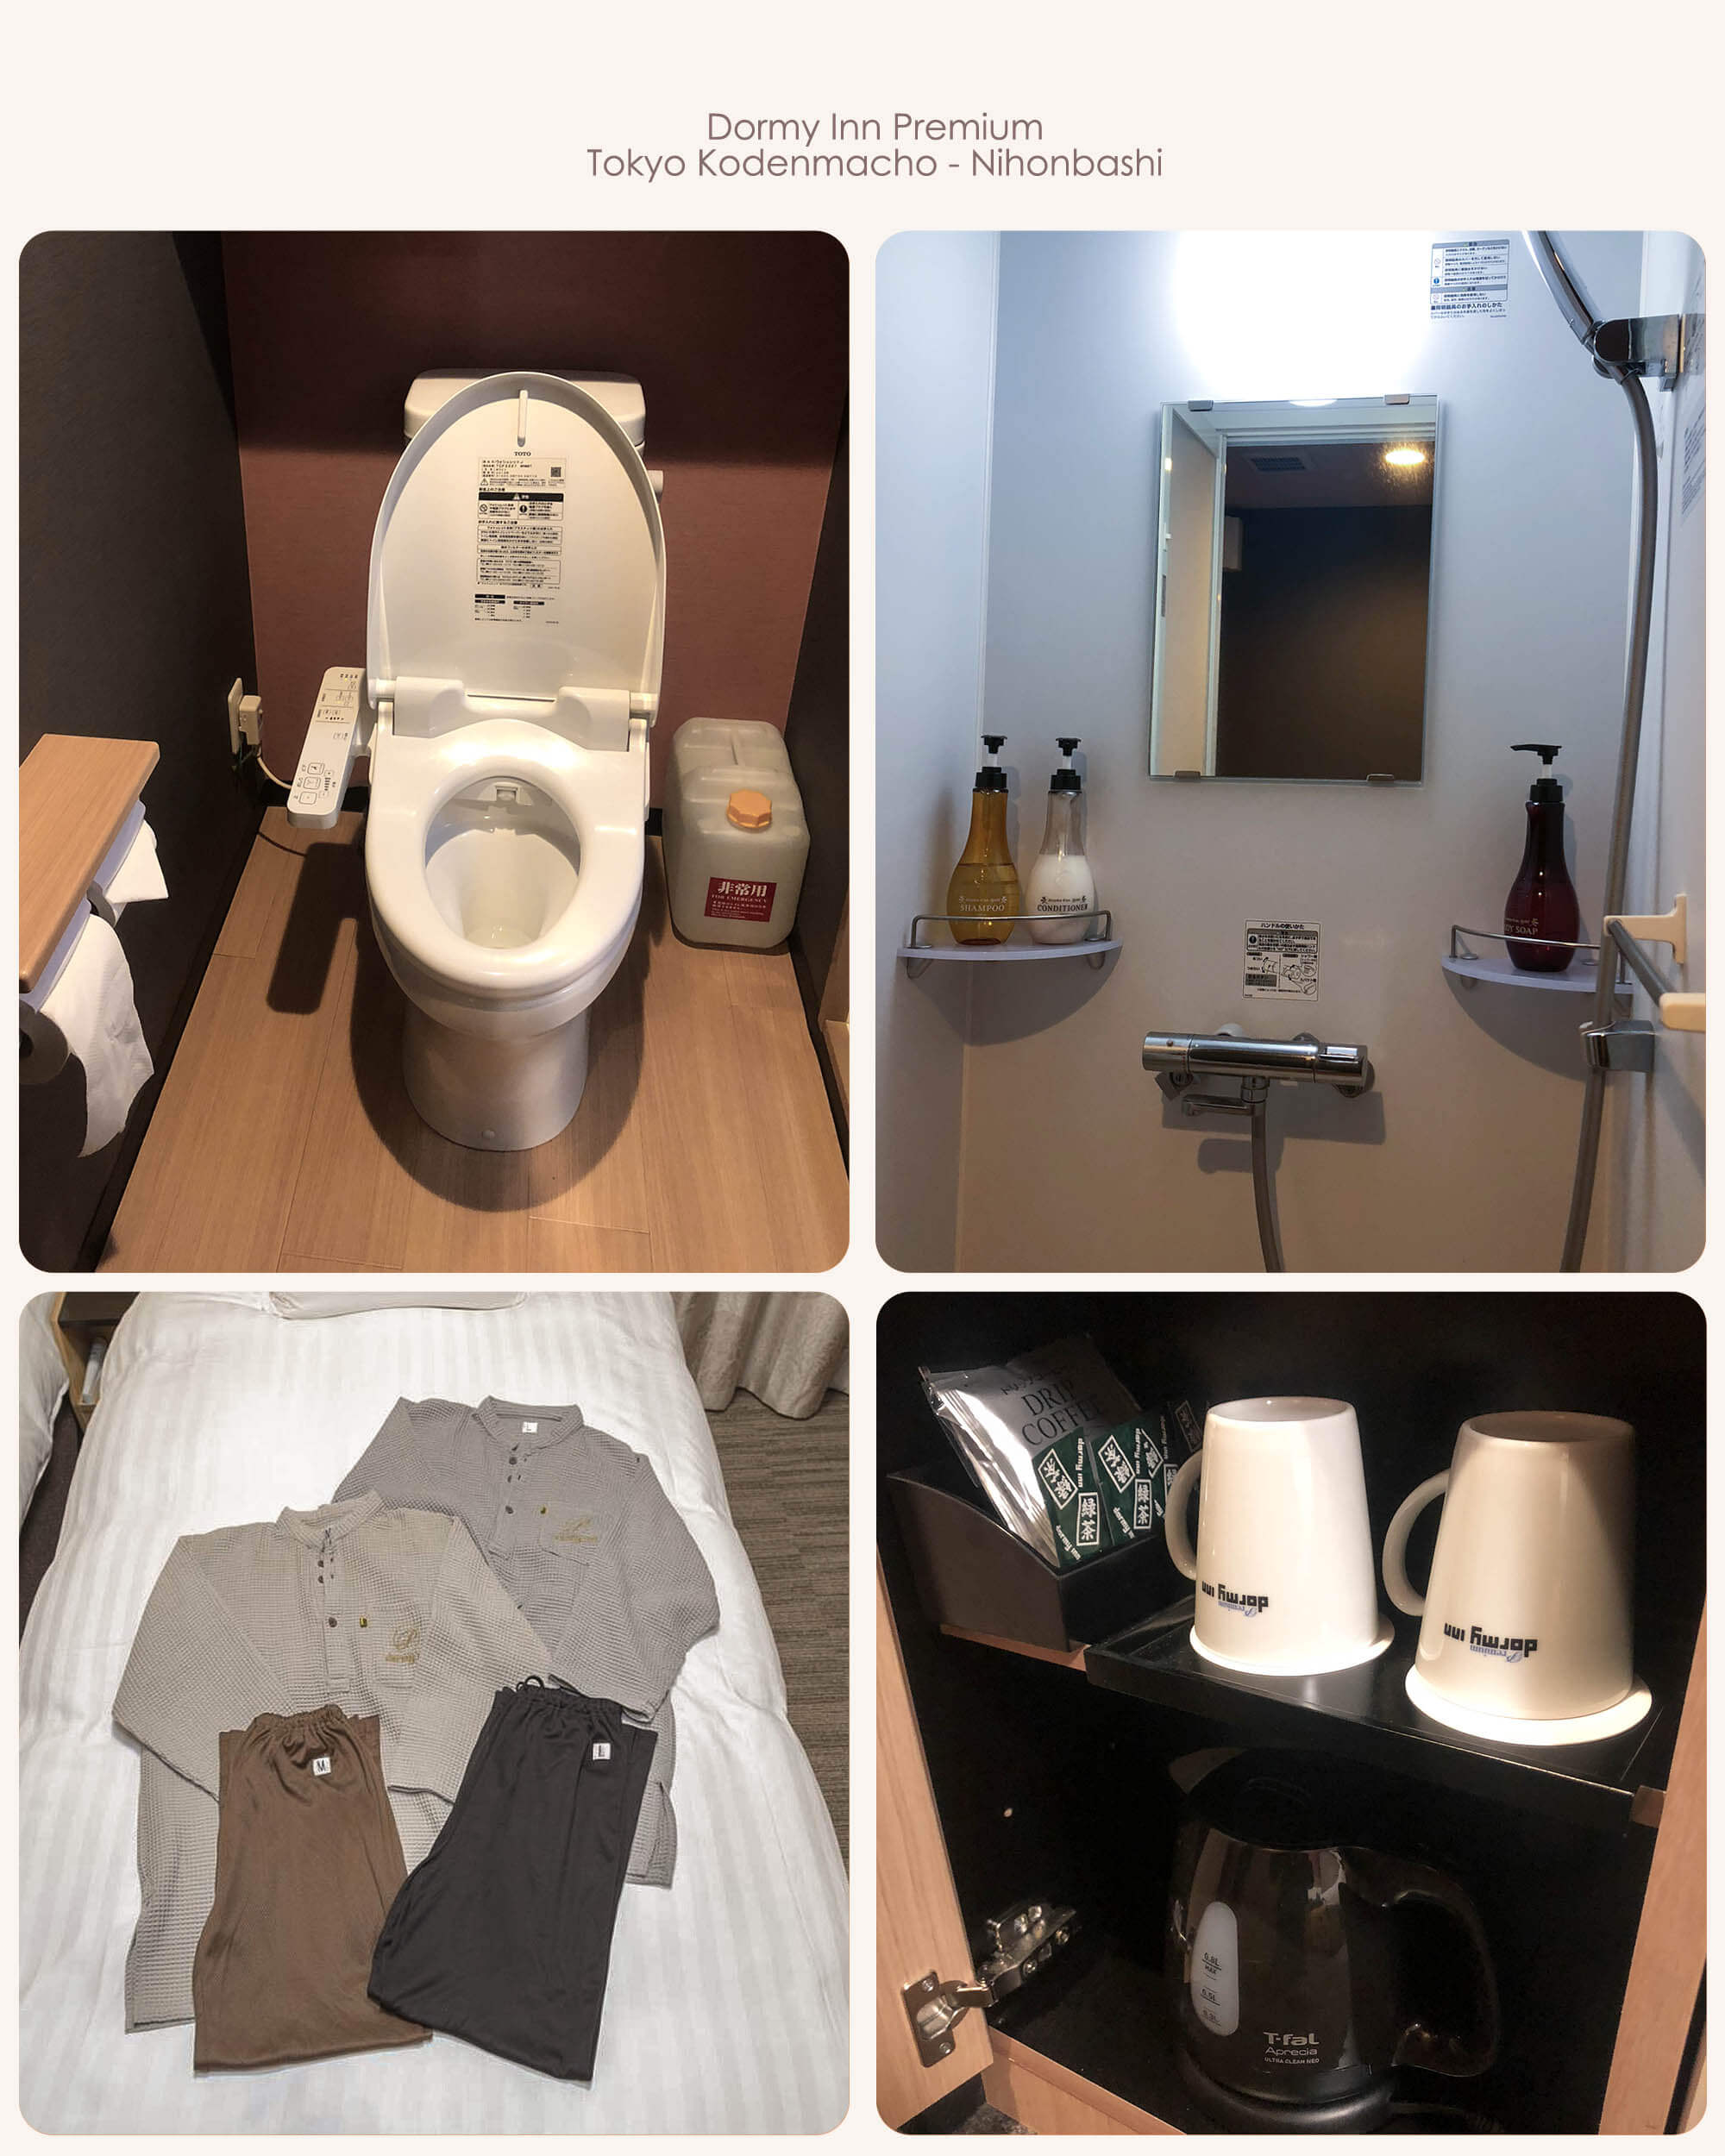 Dormyinn房間設施&廁所